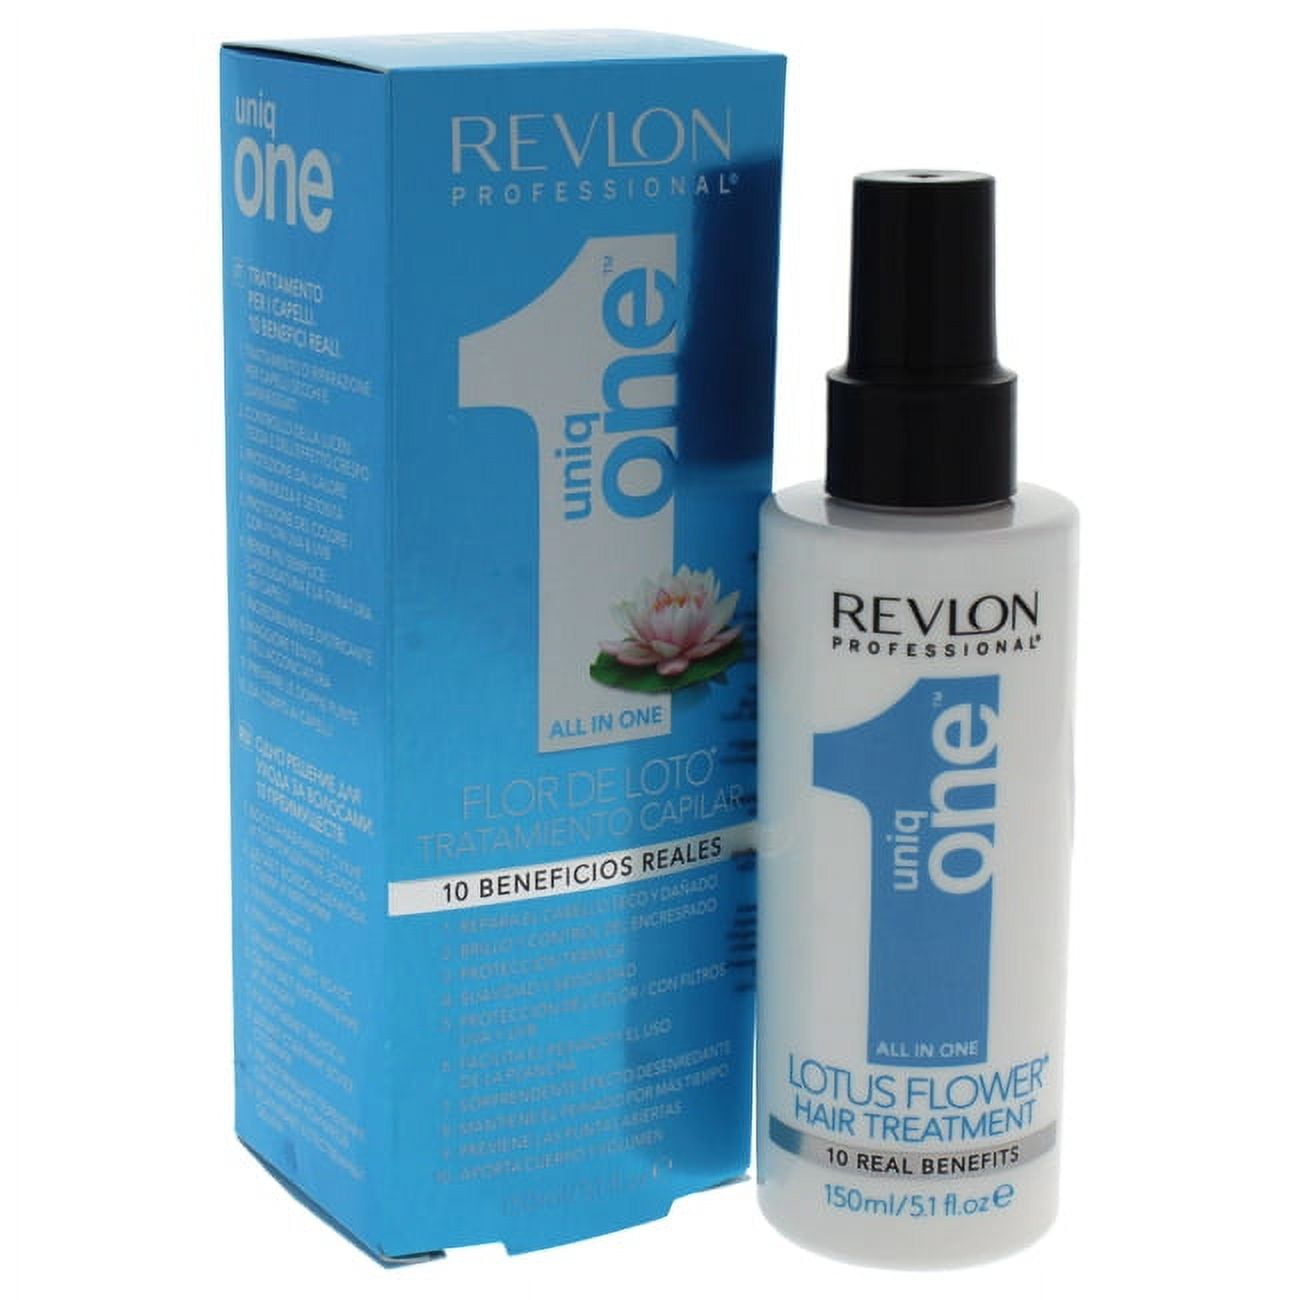 Revlon Uniq One Lotus Flower Hair Treatment - 5.1 oz Treatment